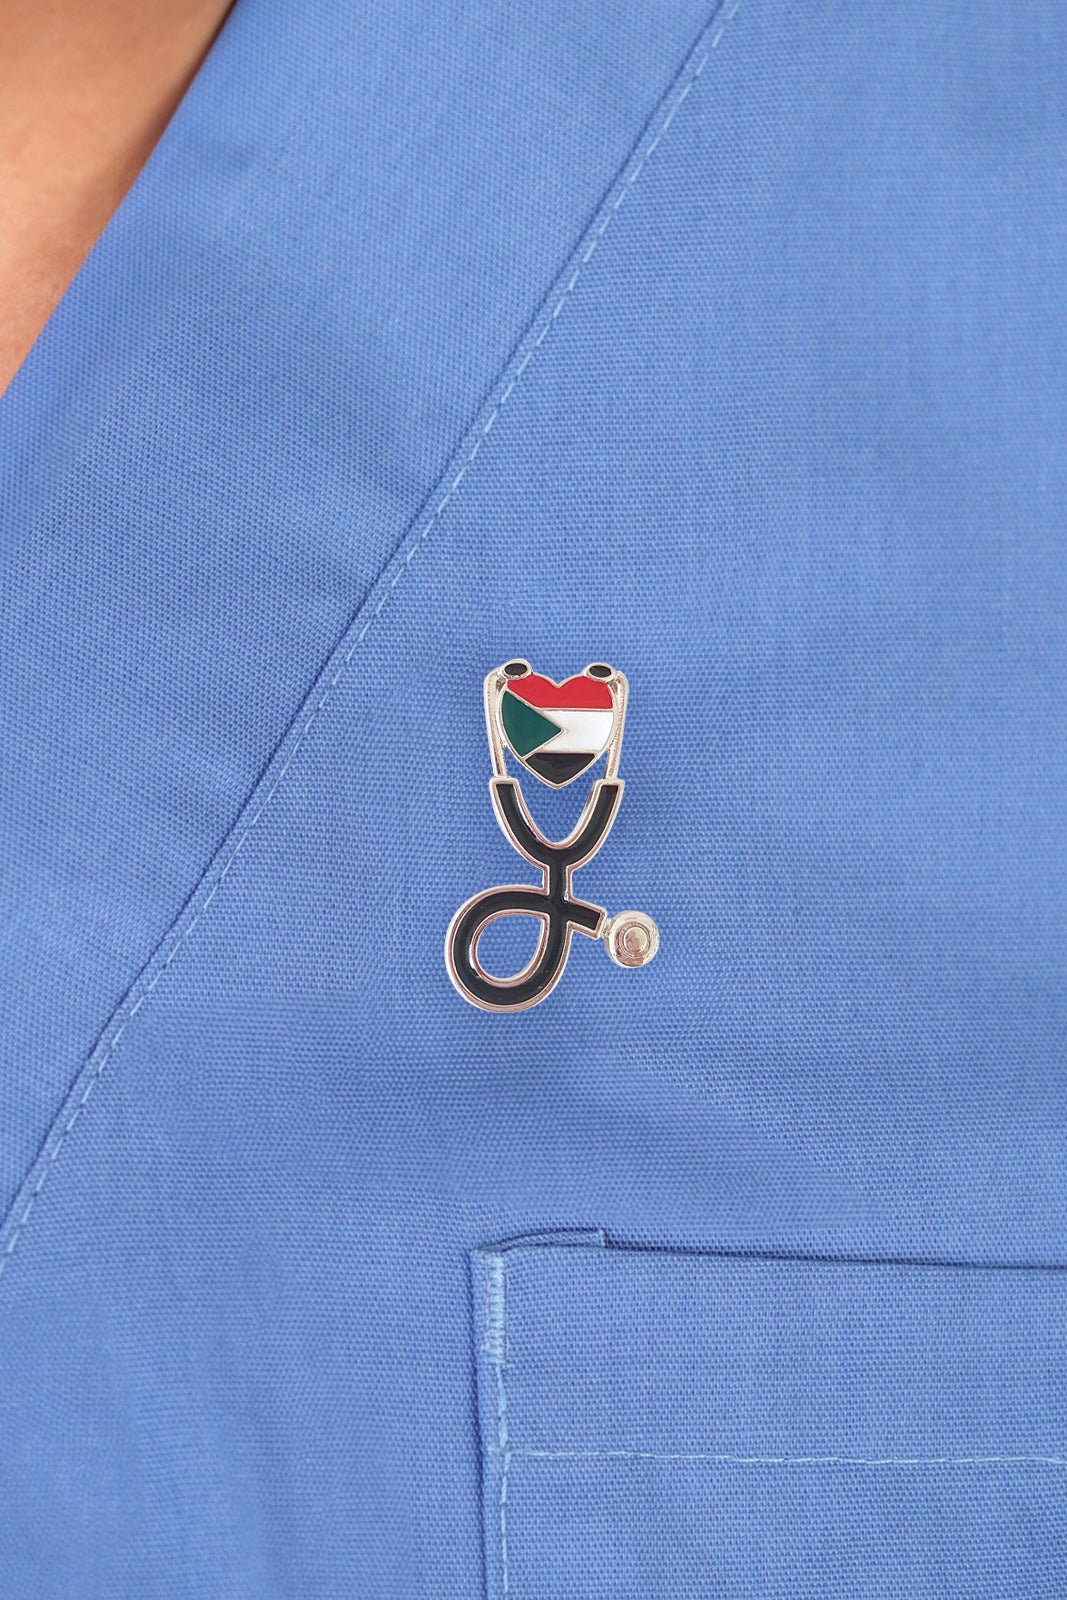 Sudan Flag Pin